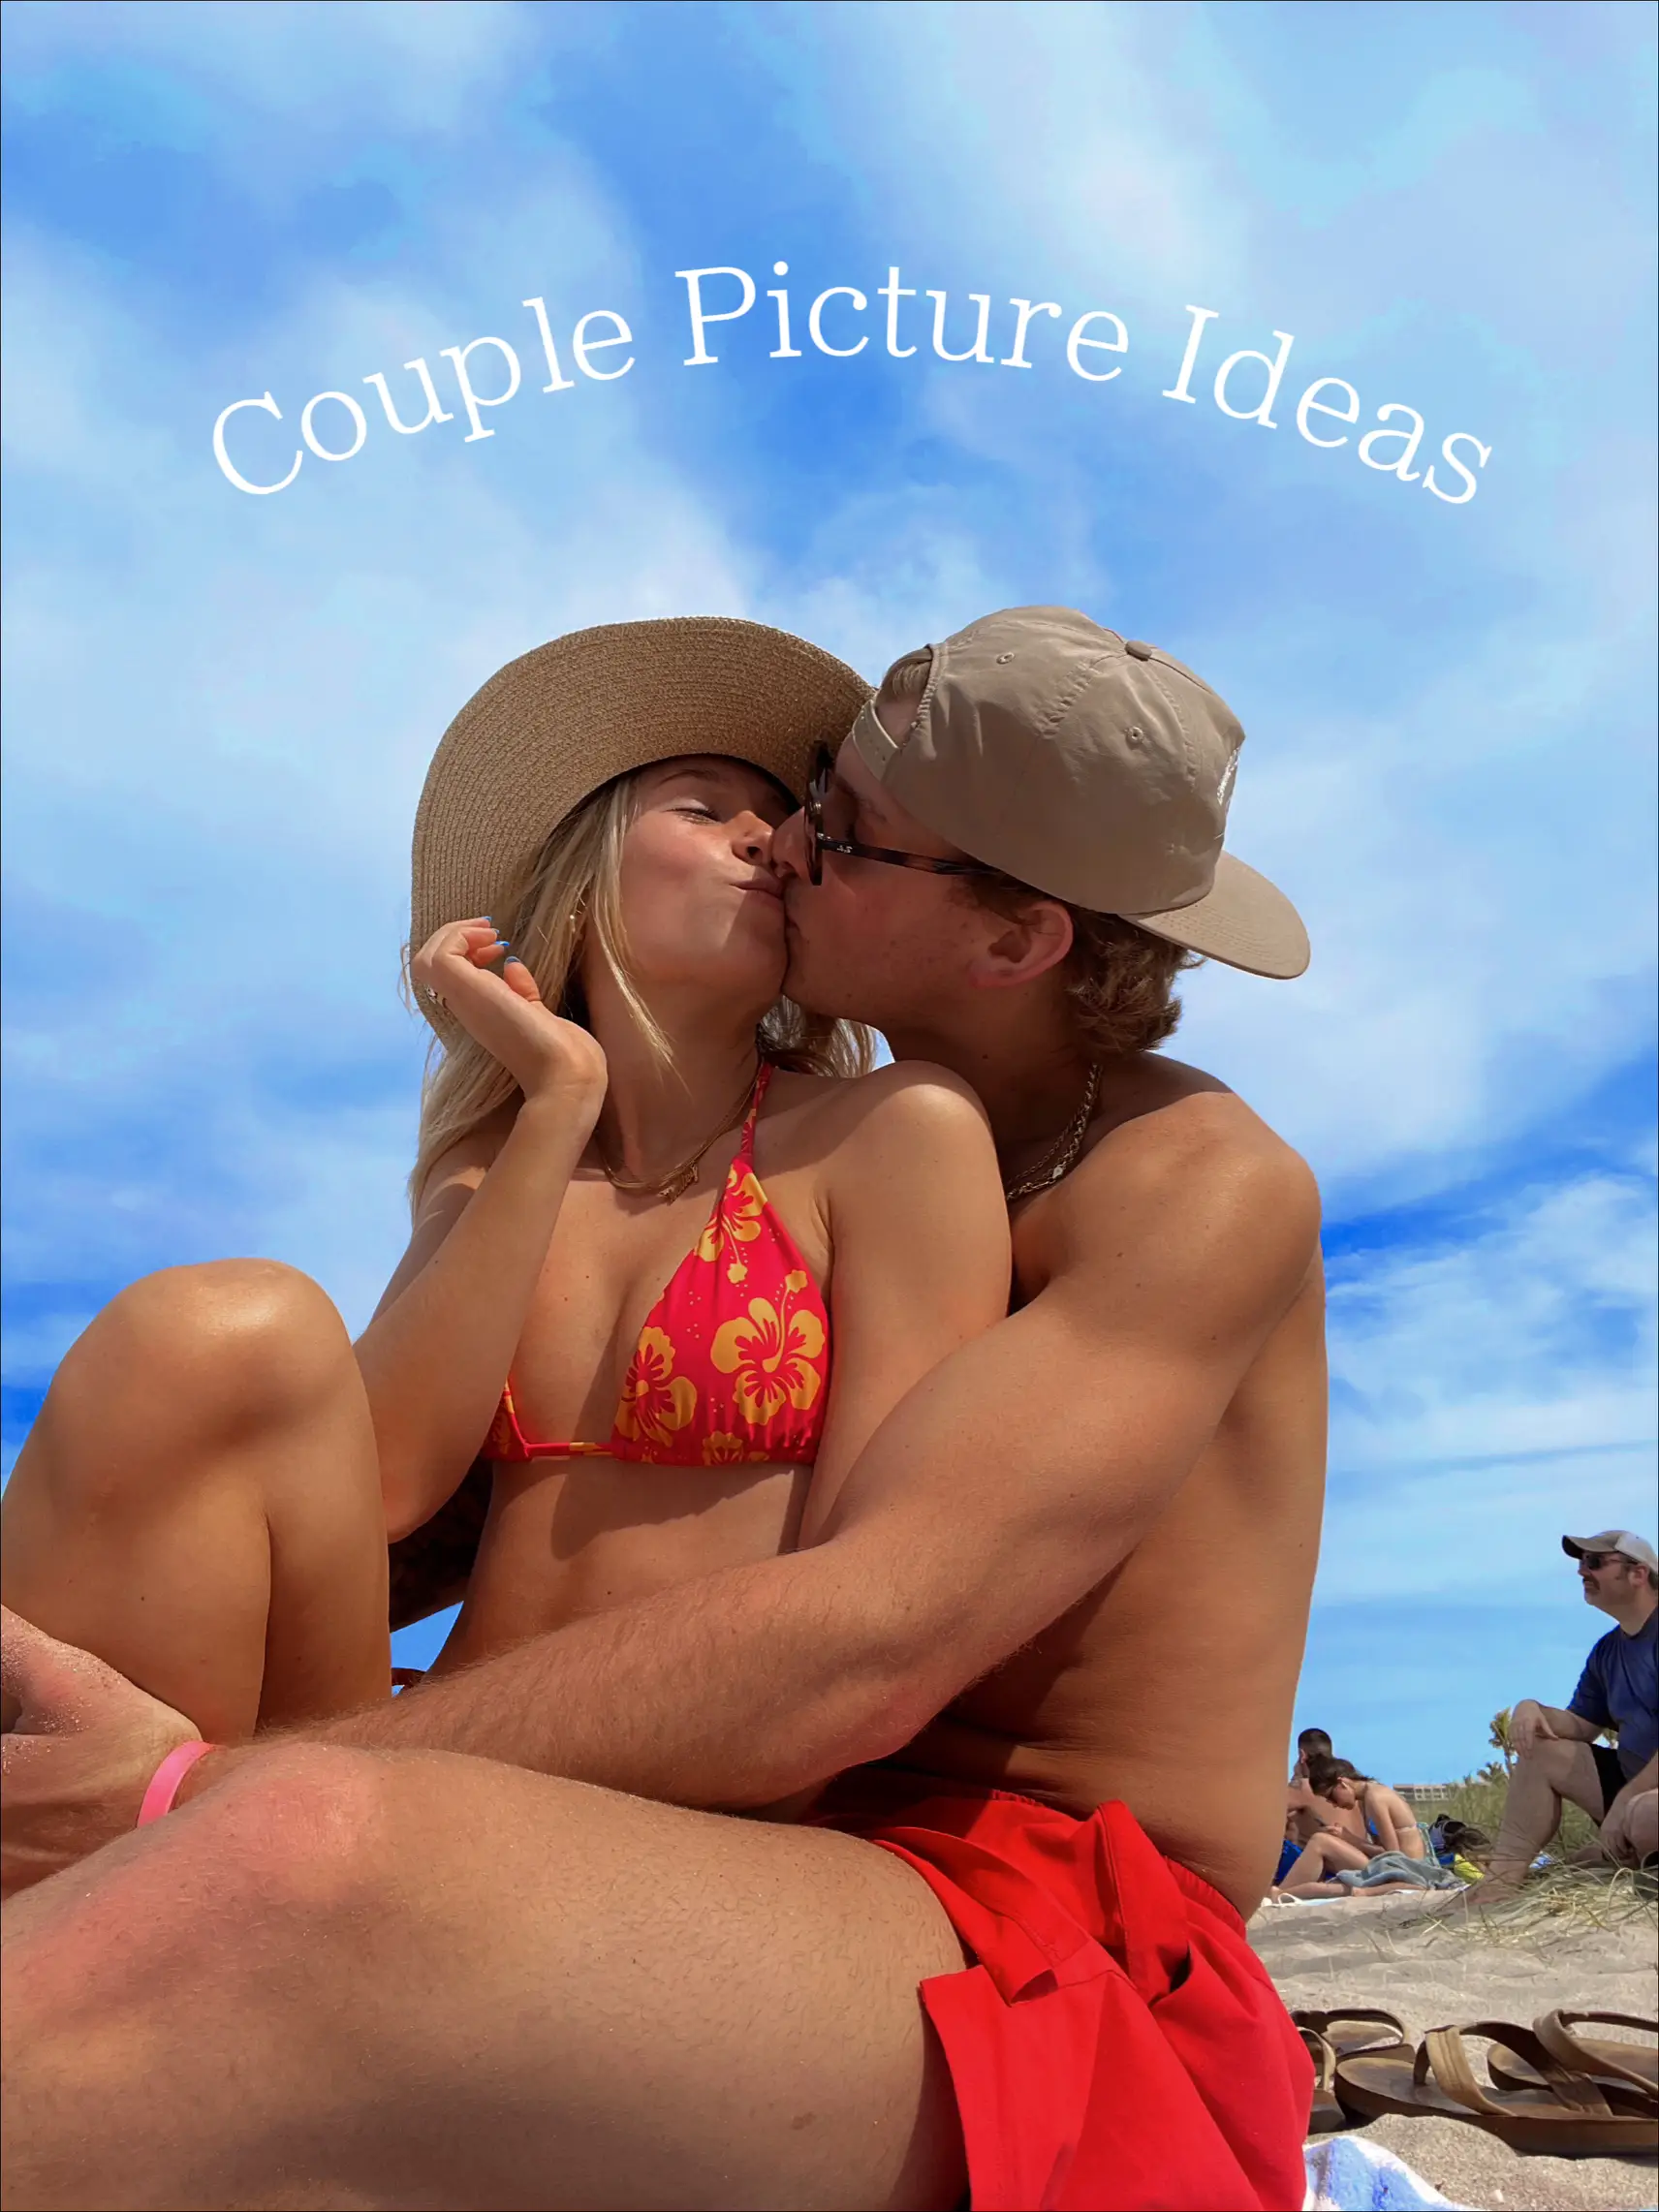 Couple Picture Ideas's images